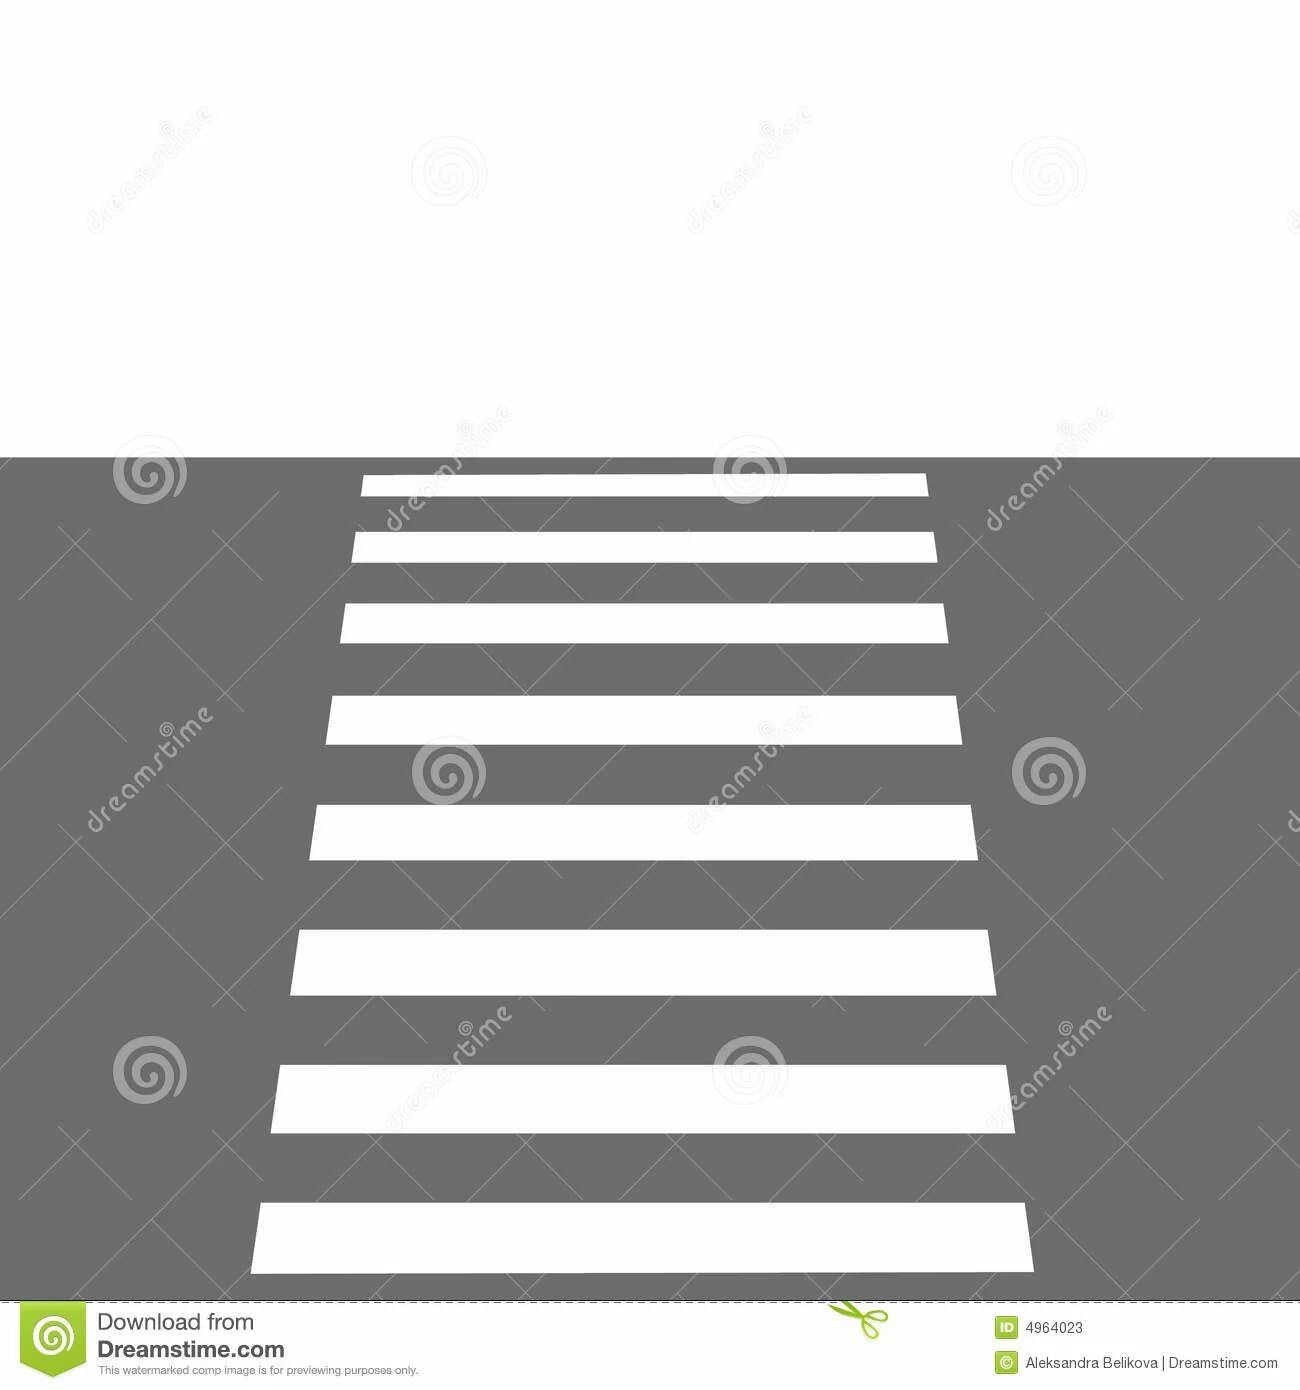 Zebra crossing #2